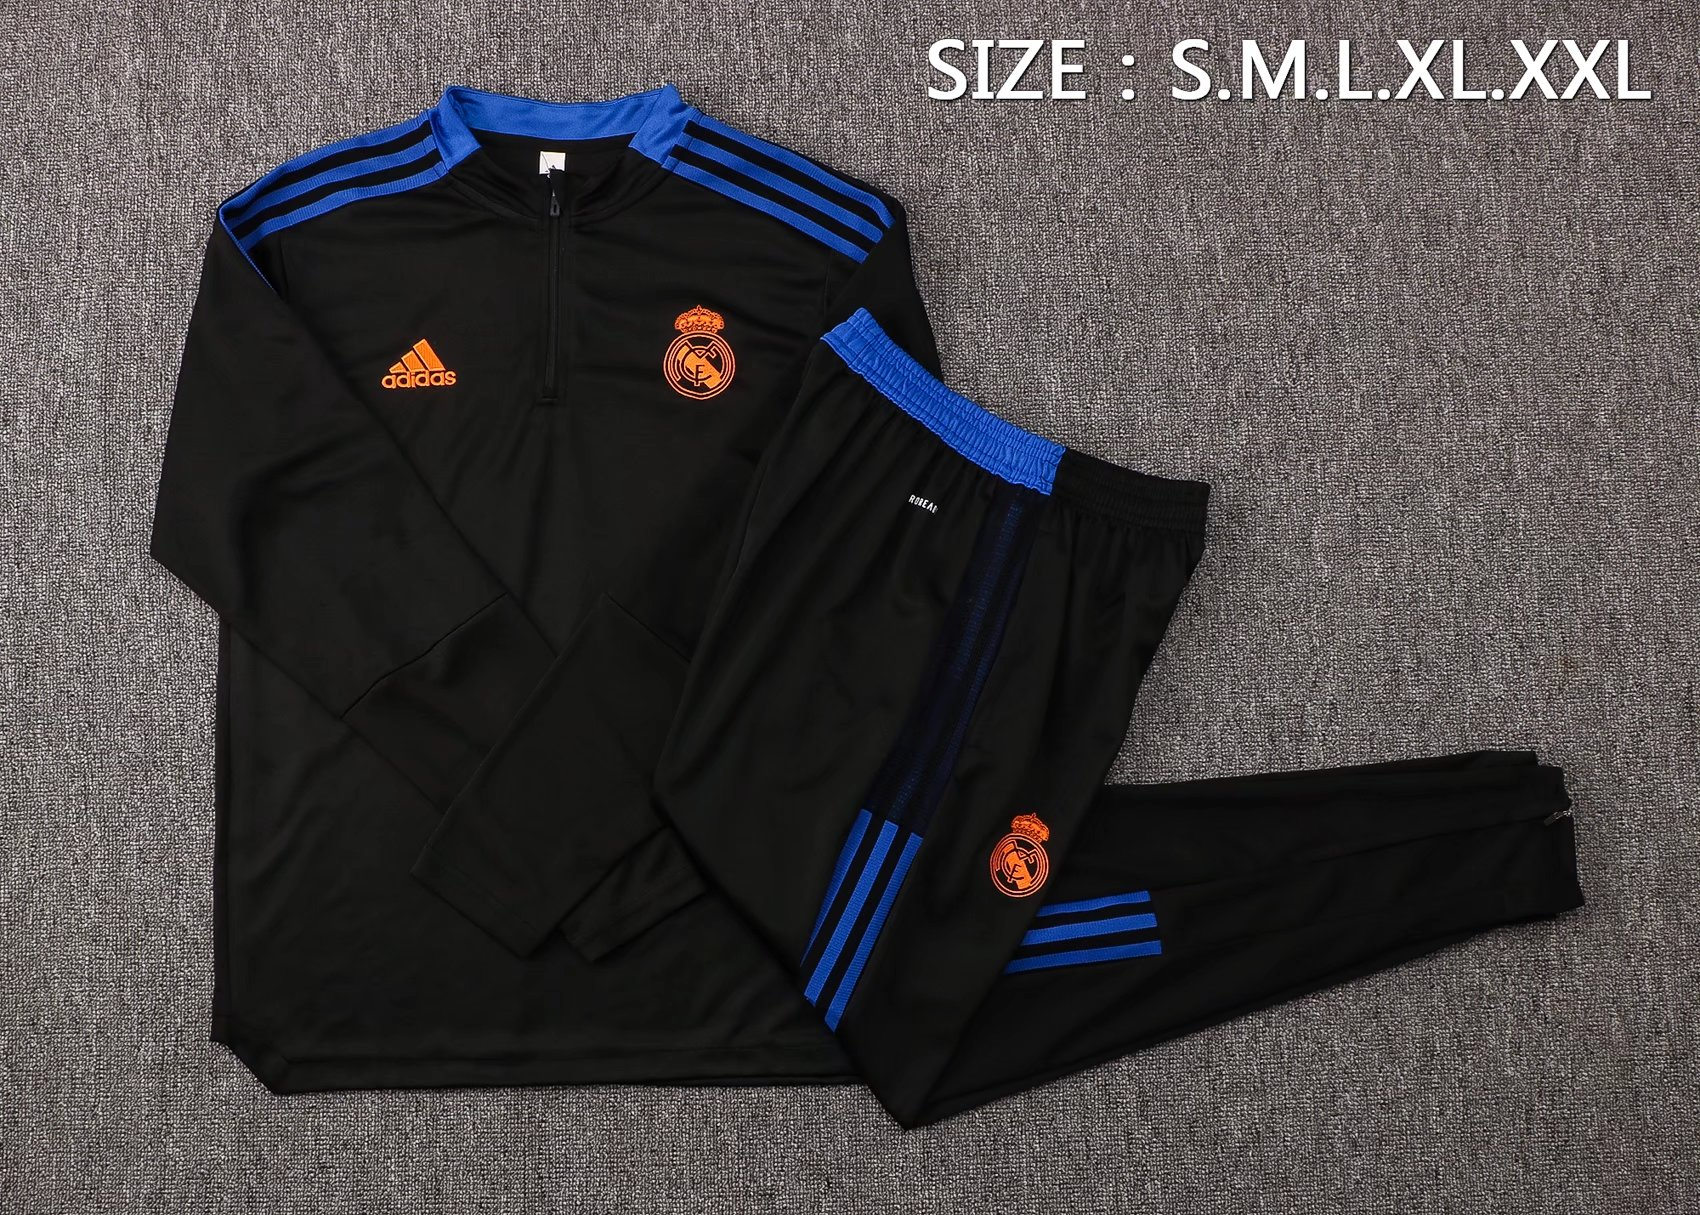 Real Madrid Soccer Training Suit Black Mens 2021/22